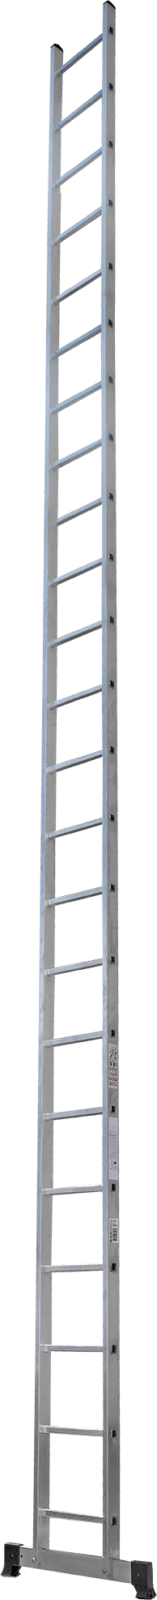 Лестница алюминиевая приставная NV1210 артикул 1210123